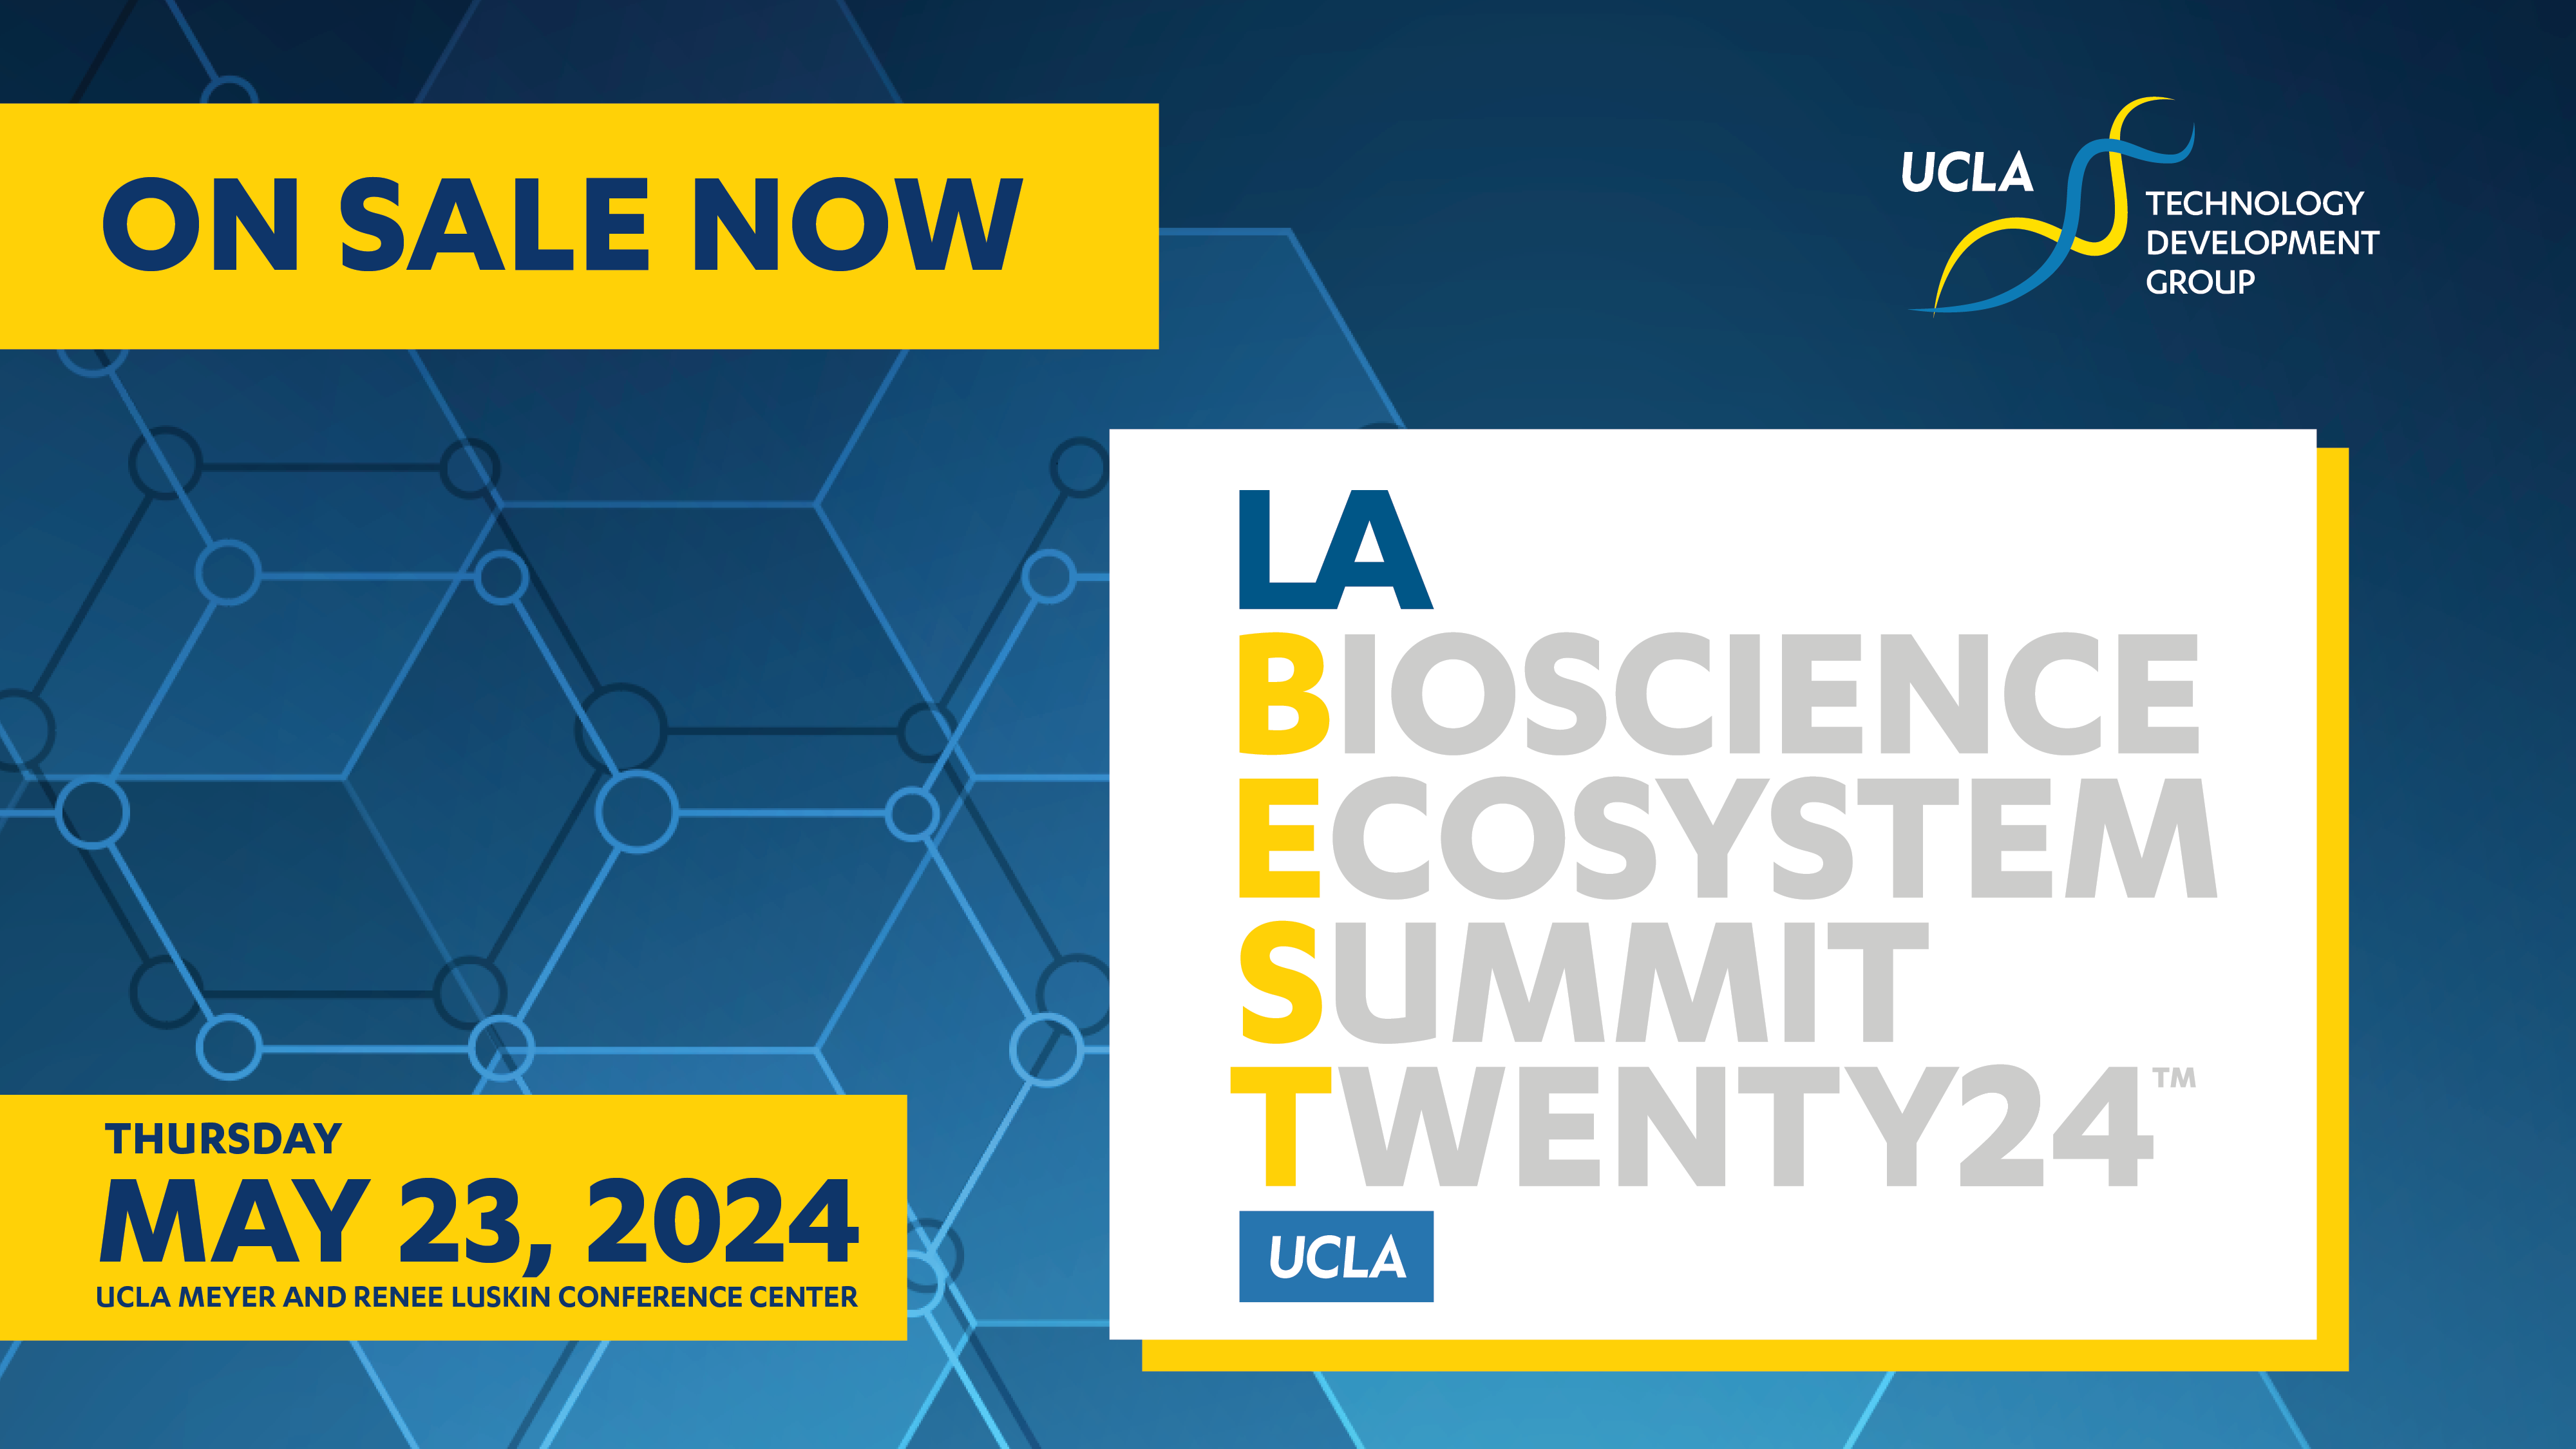 LA Bioscience Ecosystem Summit Twenty24 Event